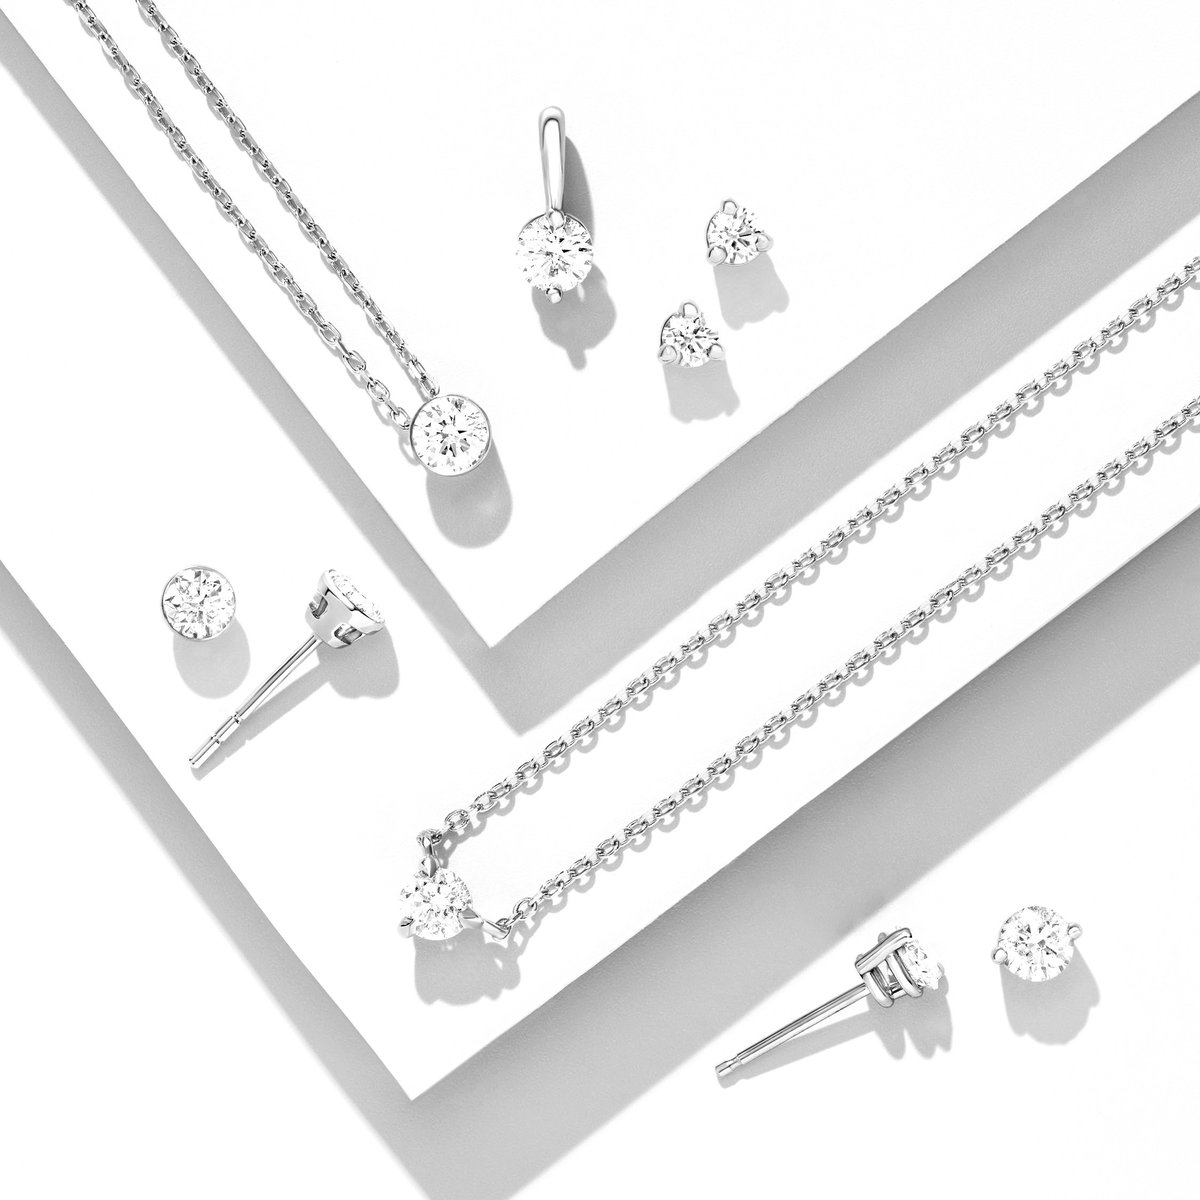 Platinum Jewellery - Elevate your style with our premium jewellery range! Custom made to order. Diamond Platinum Jewellery will bring out your sparkle. 

#jewelsofstleon #platinumjewellery #luxury #diamondjewellery #sparkleandshine #platinum #jewellery